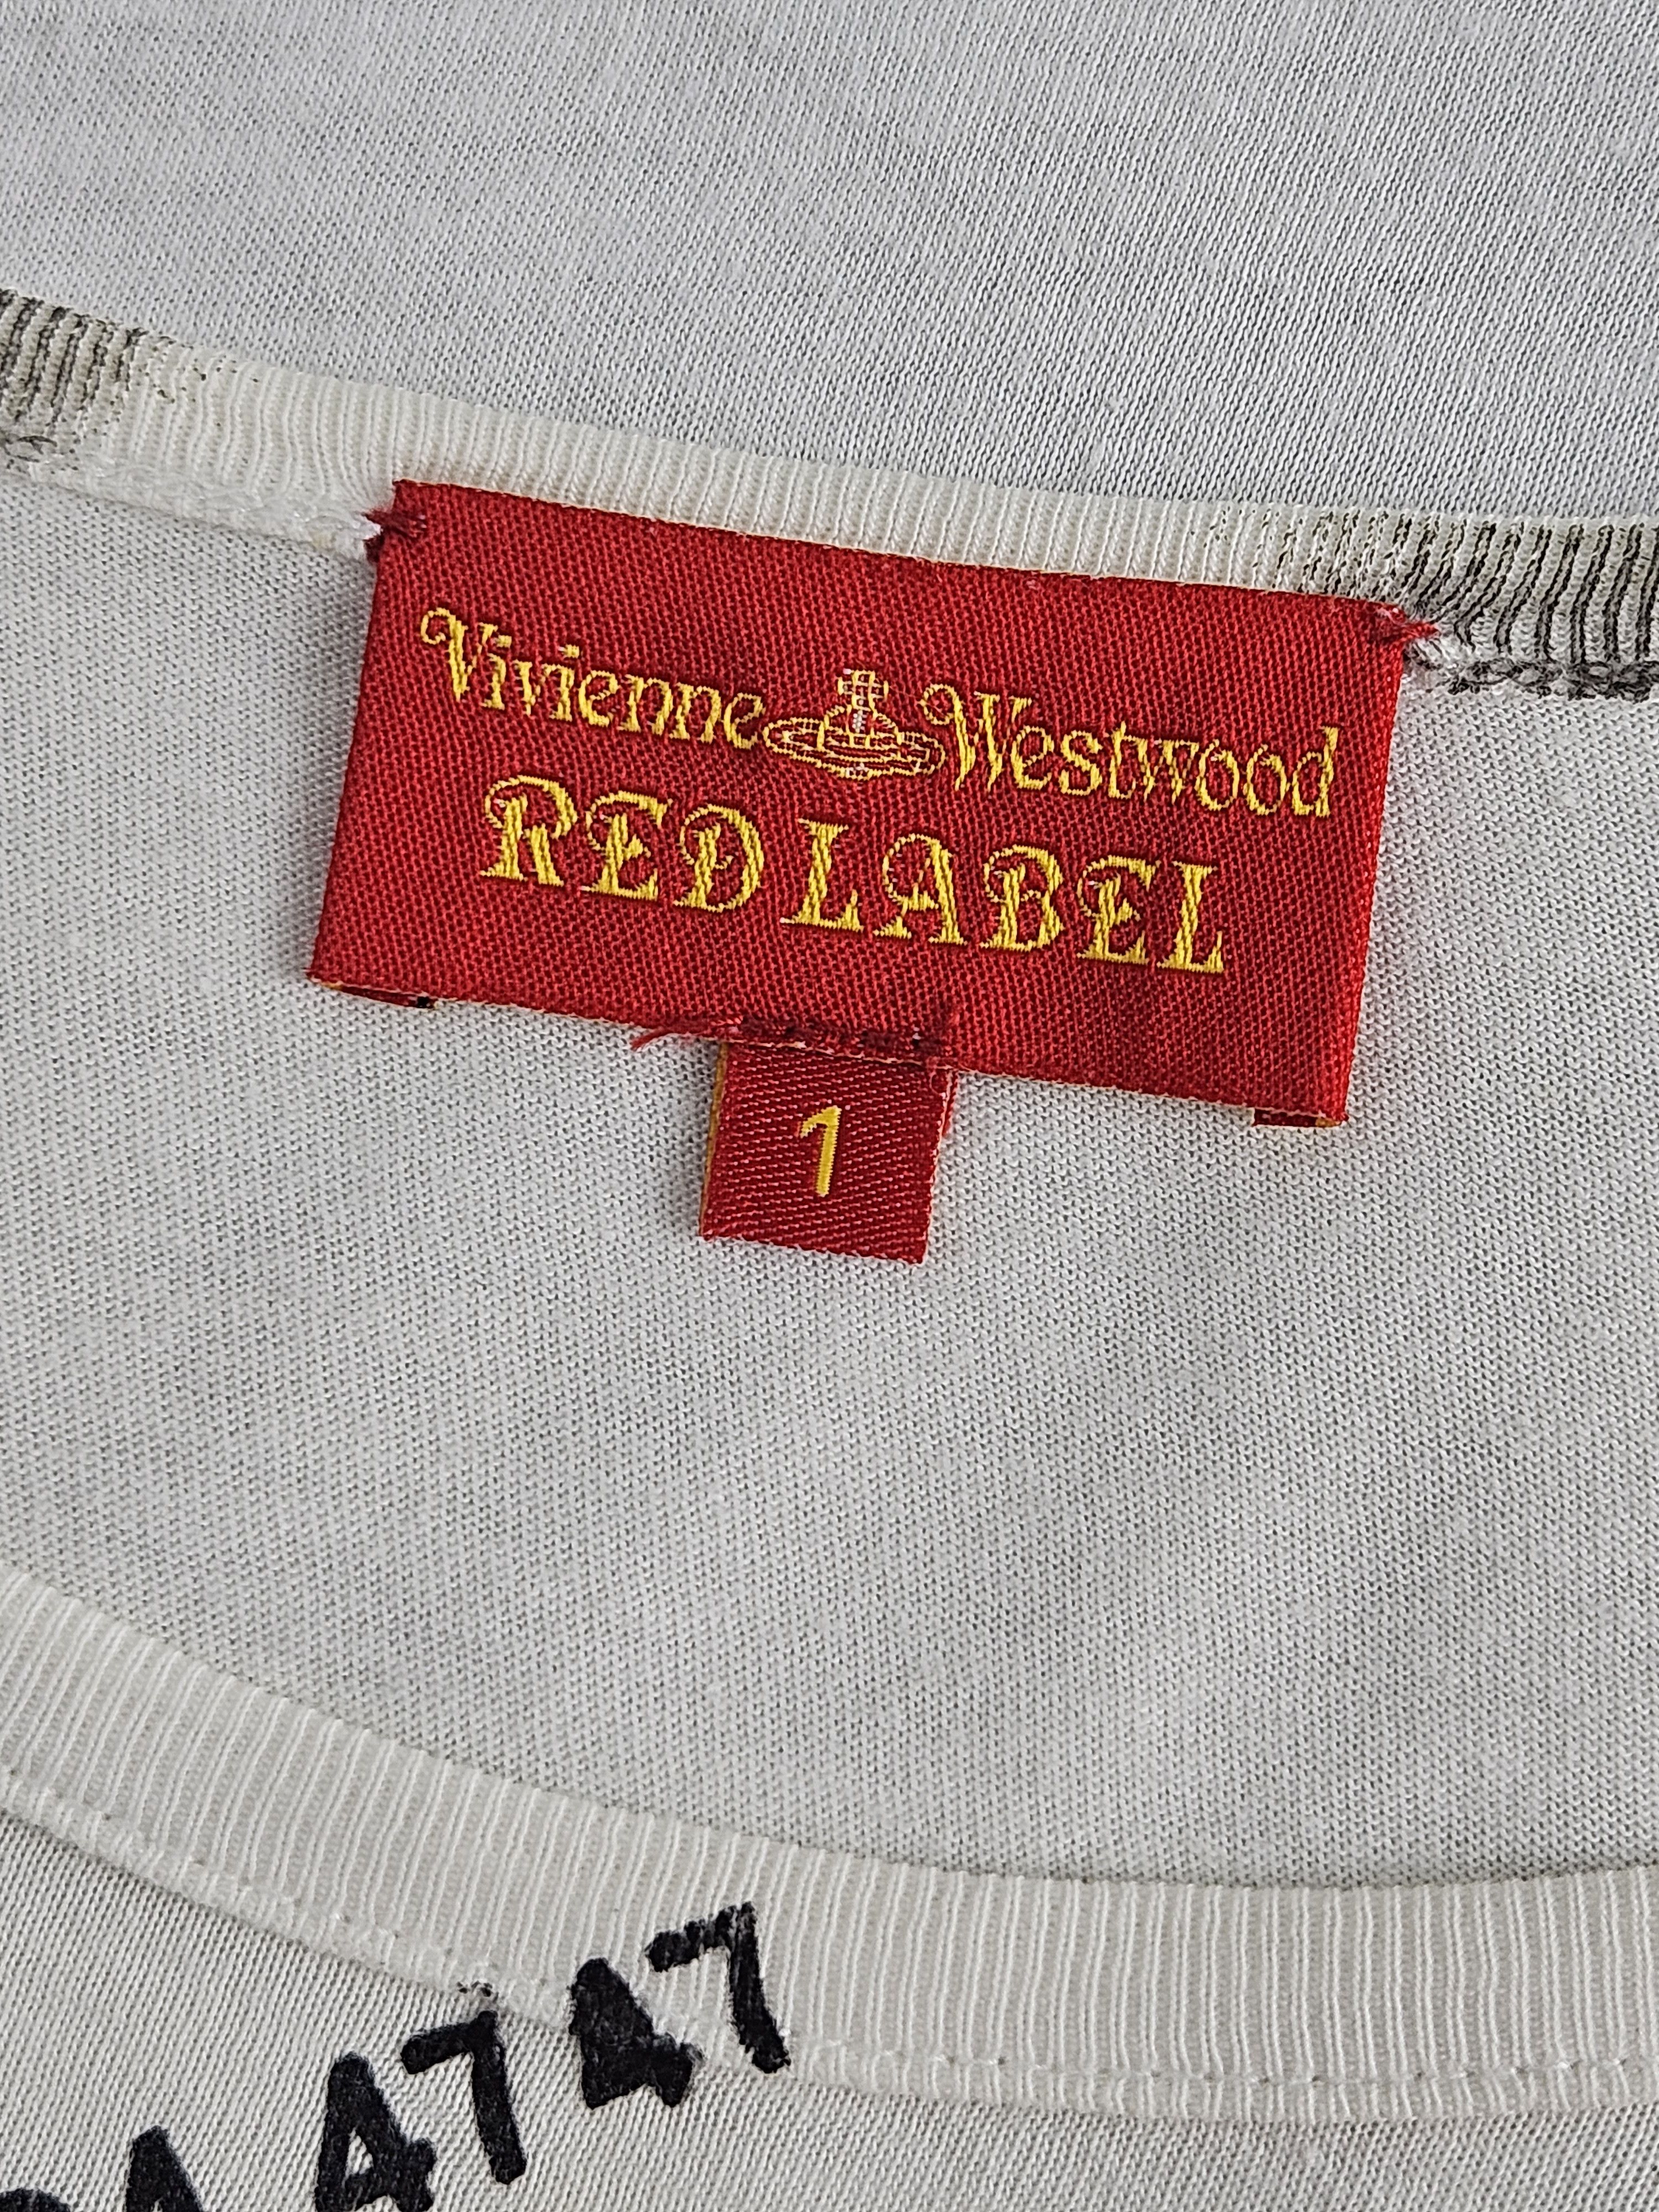 Vivienne Westwood Red Label Shirt - 4